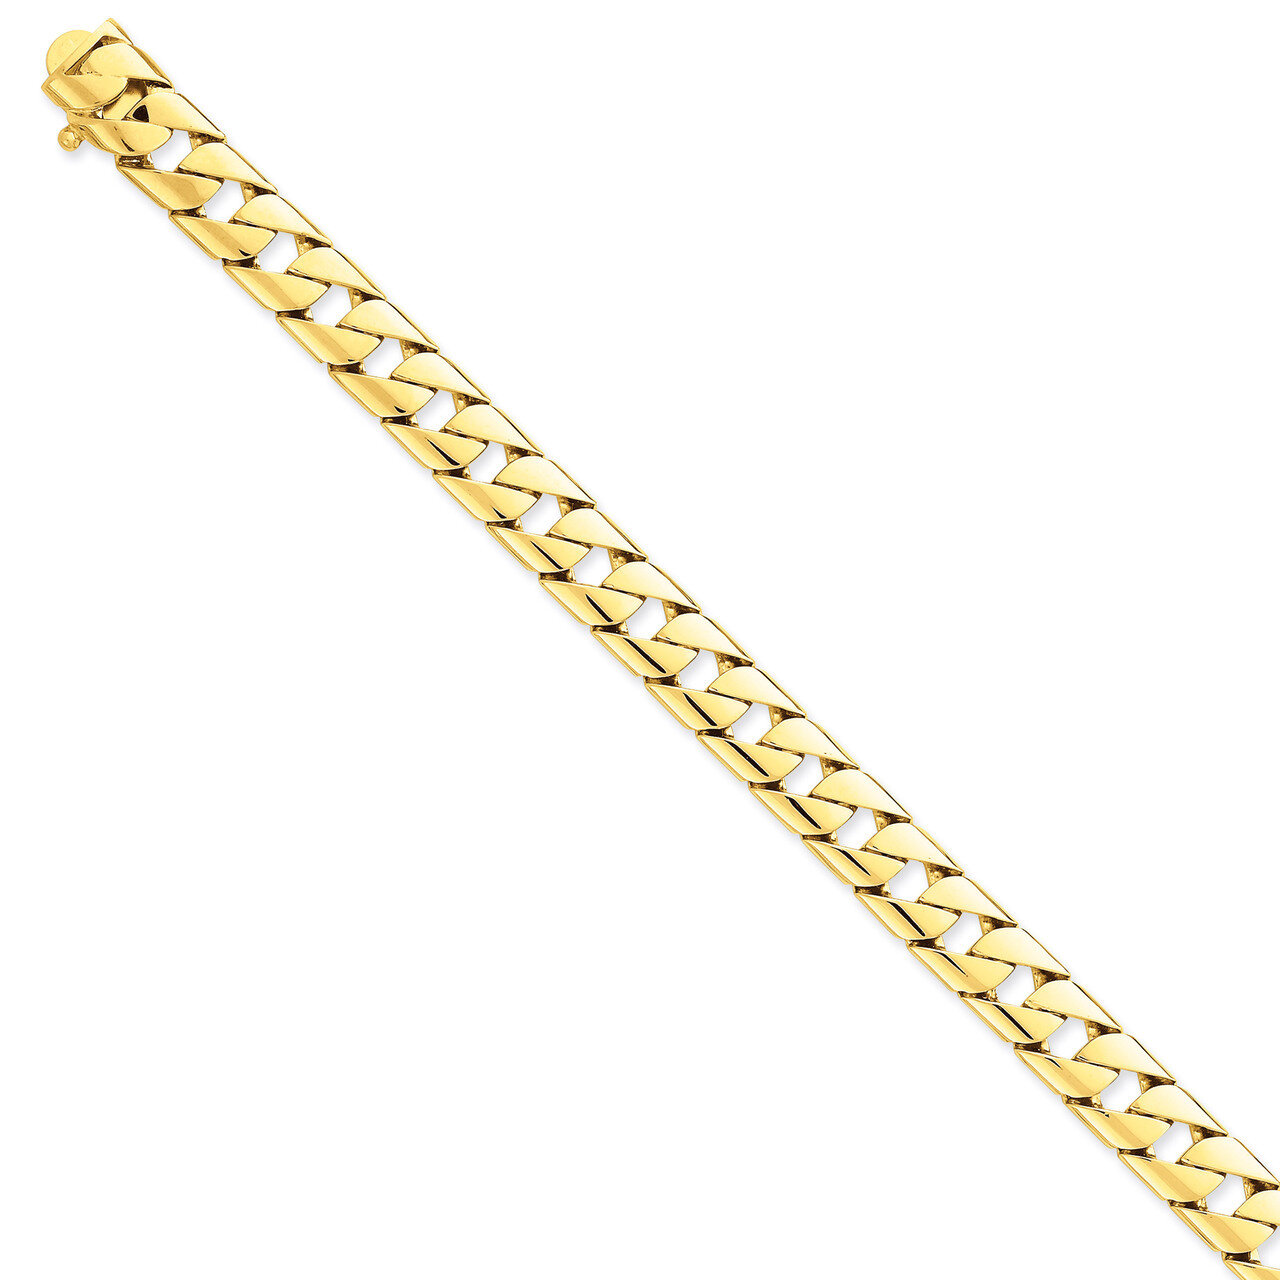 10mm Hand-Polished Fancy Link Chain 9 Inch 14k Gold LK141-9